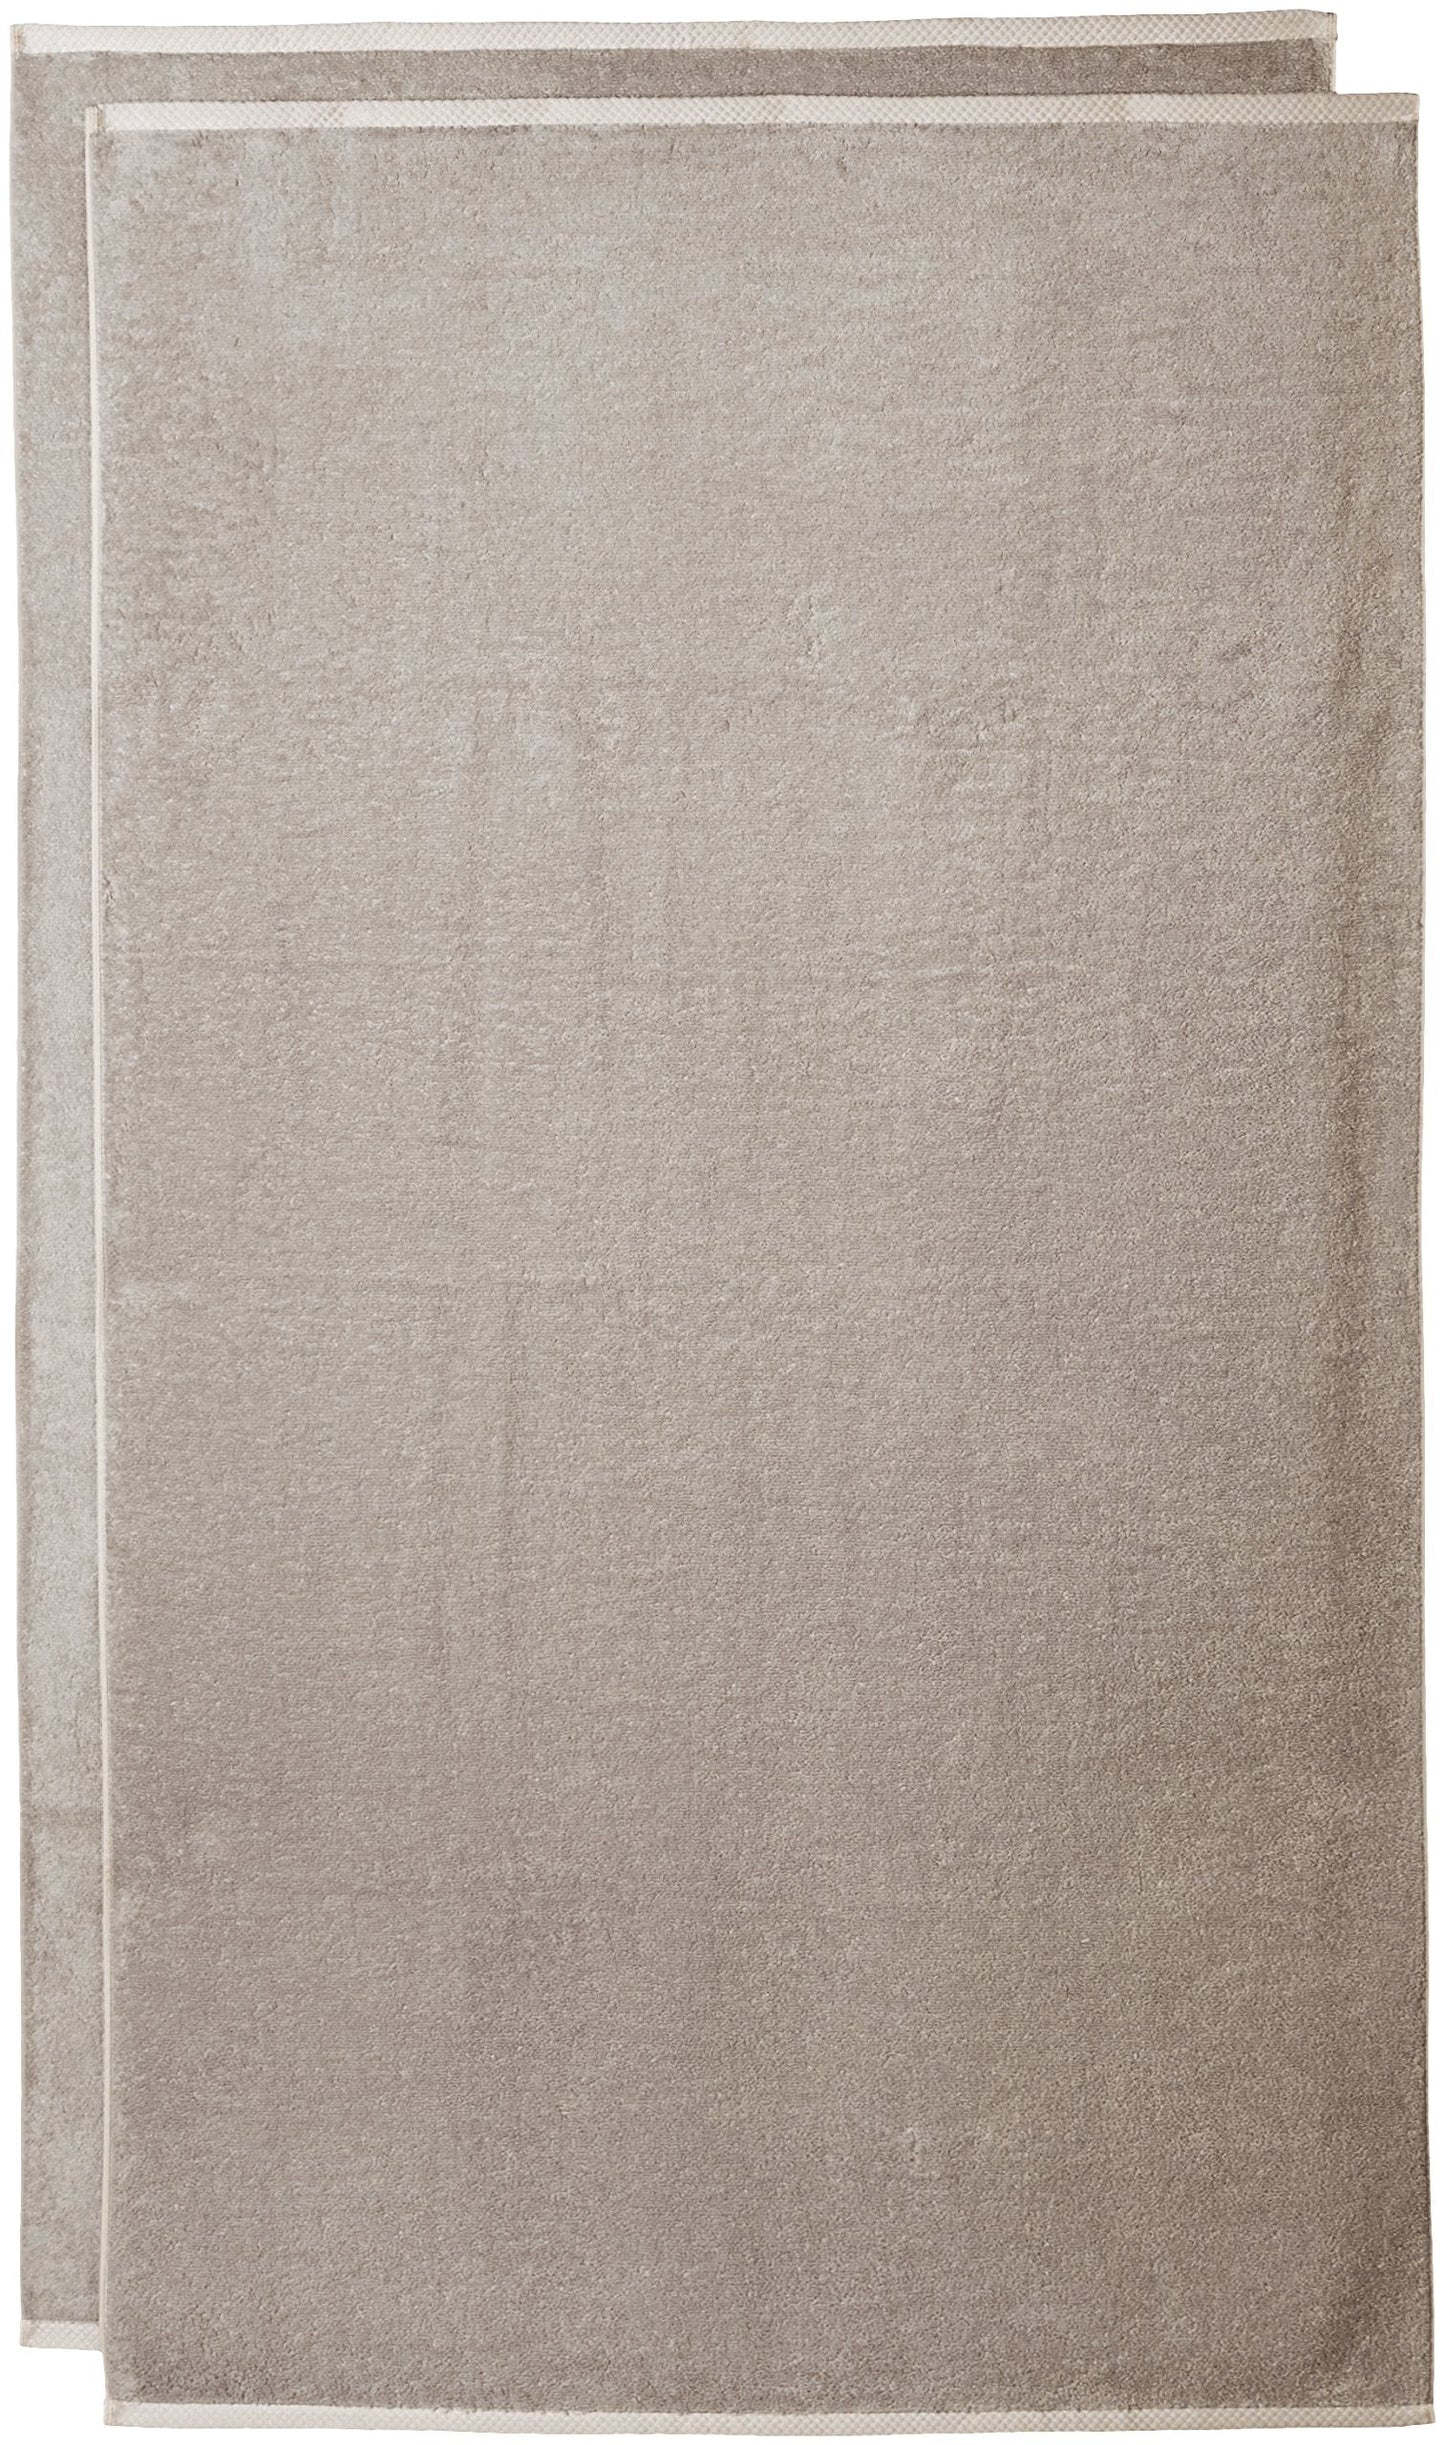 Basics 100% Cotton Quick-Dry Bath Towel, 2-Pack, Platinum, 54" x 30"